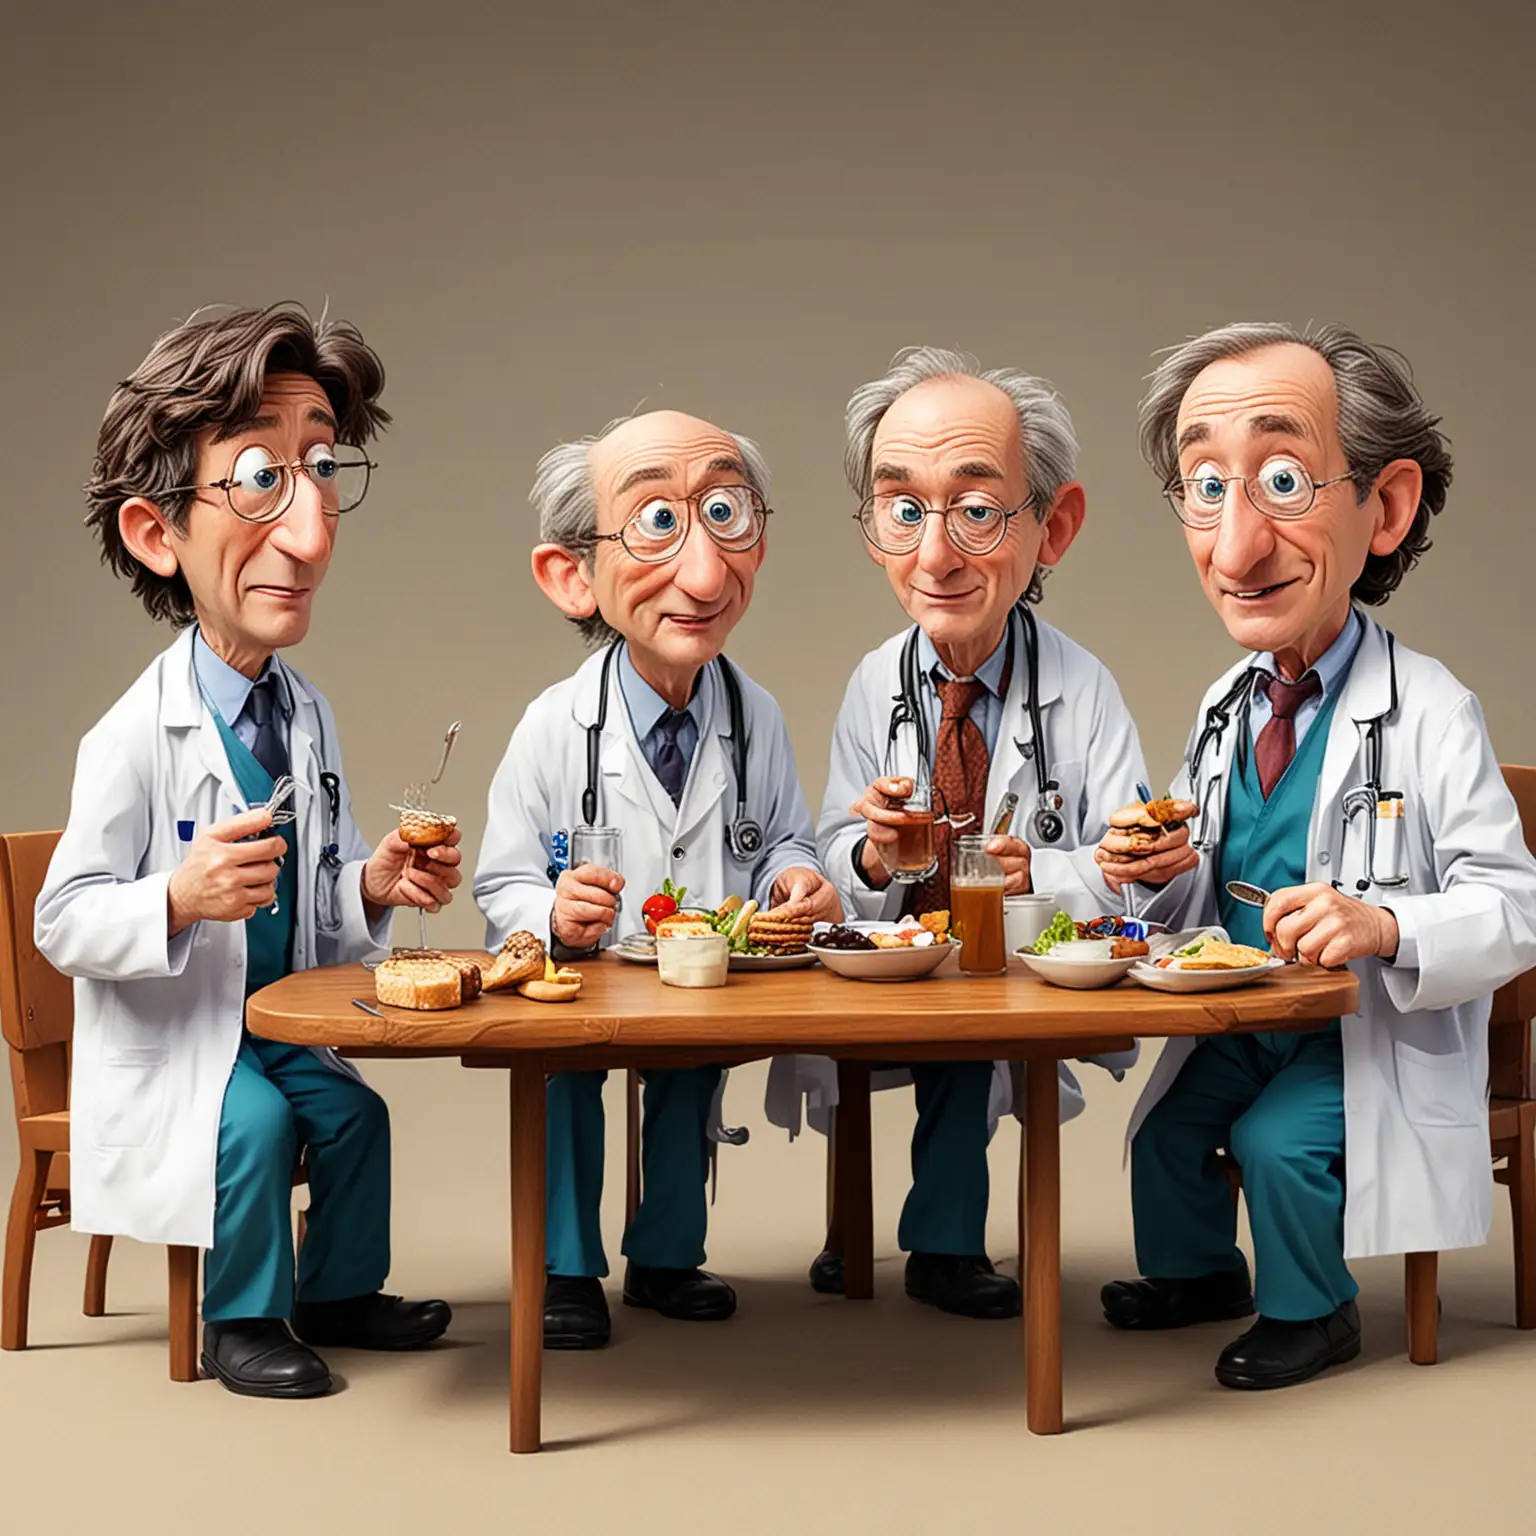 Three Doctors Enjoying Lunch Together in a Cheerful Cartoon Scene